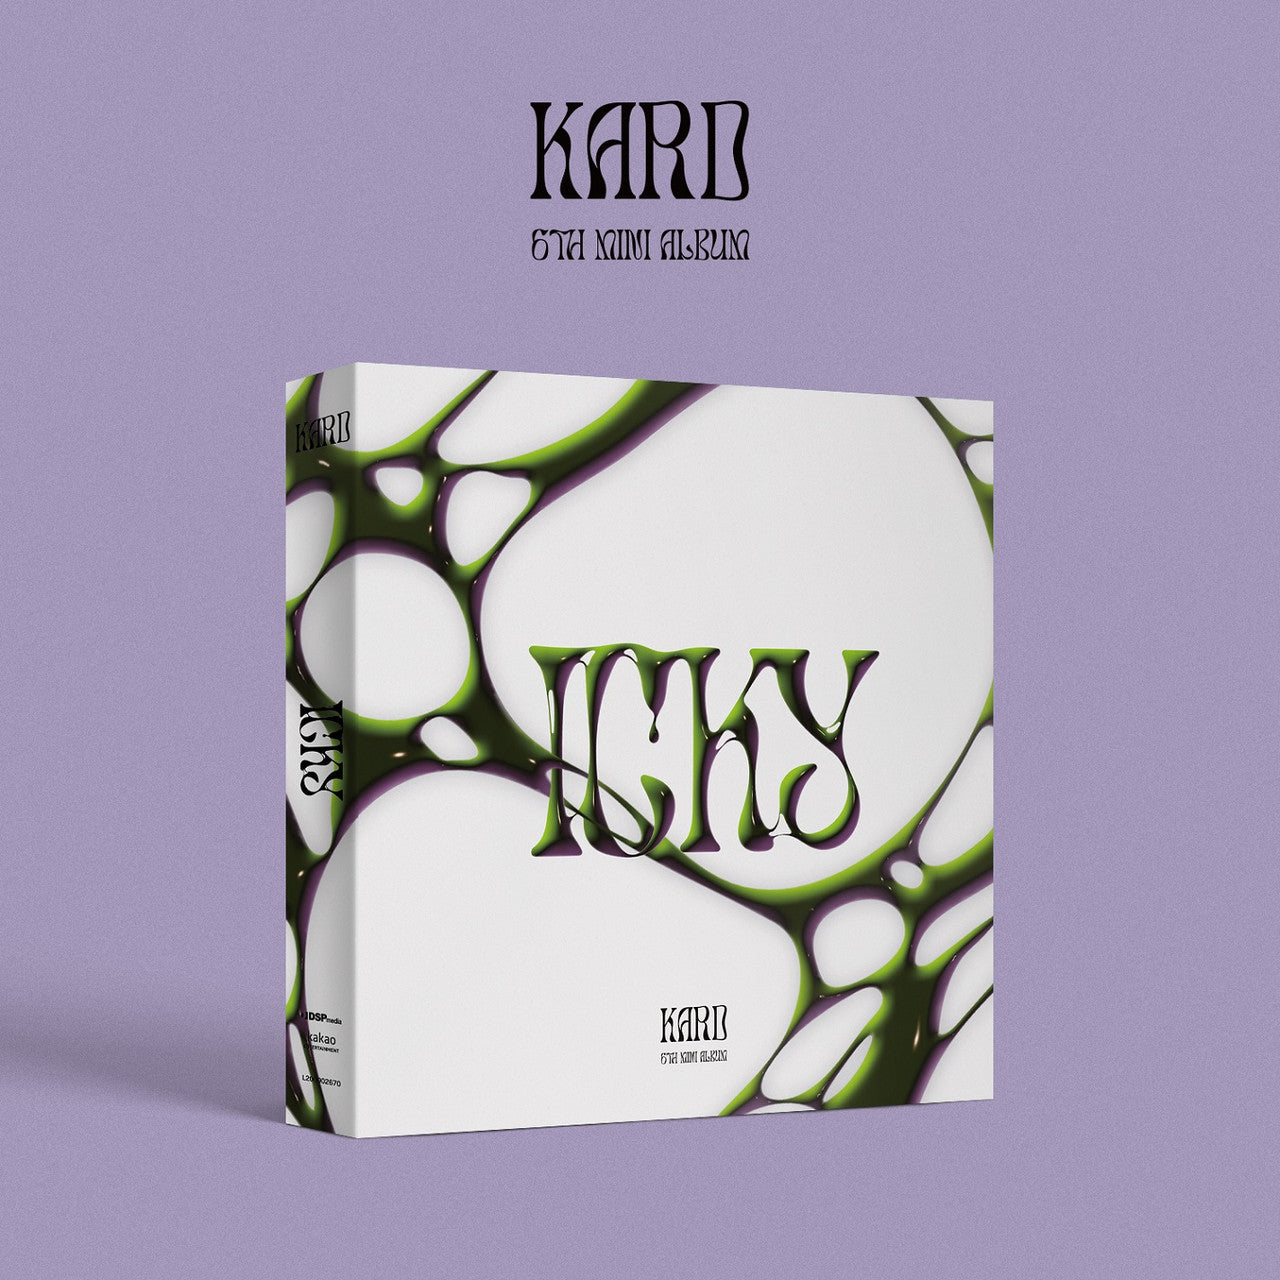 KARD 6th Mini Album ICKY - Special Version